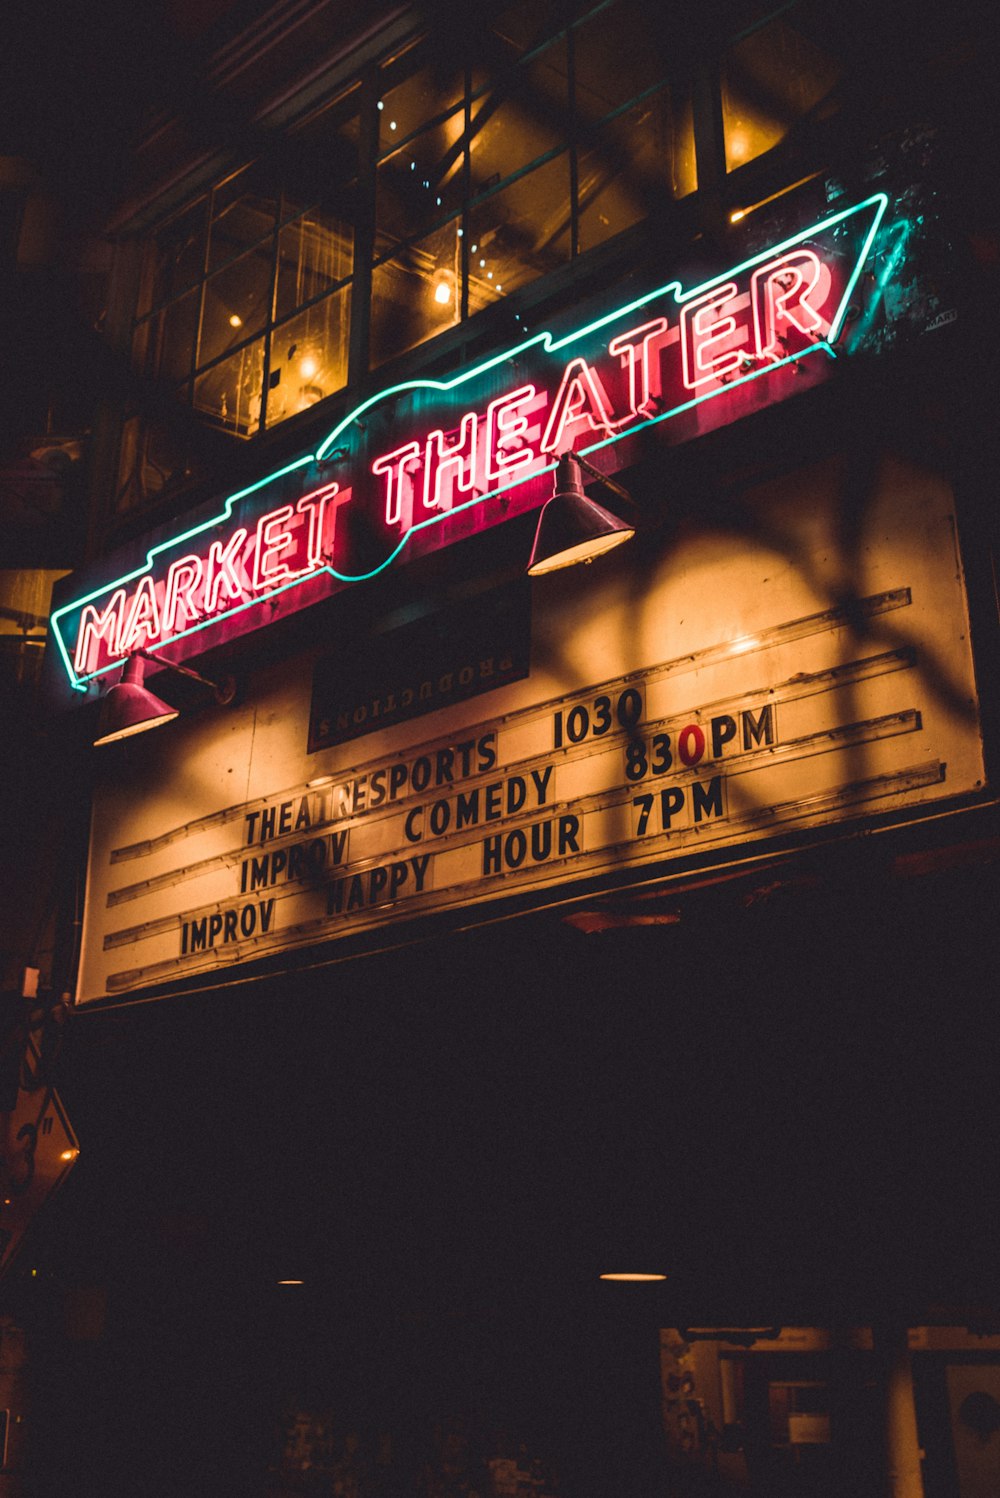 Market Theater LED signage at nighttime